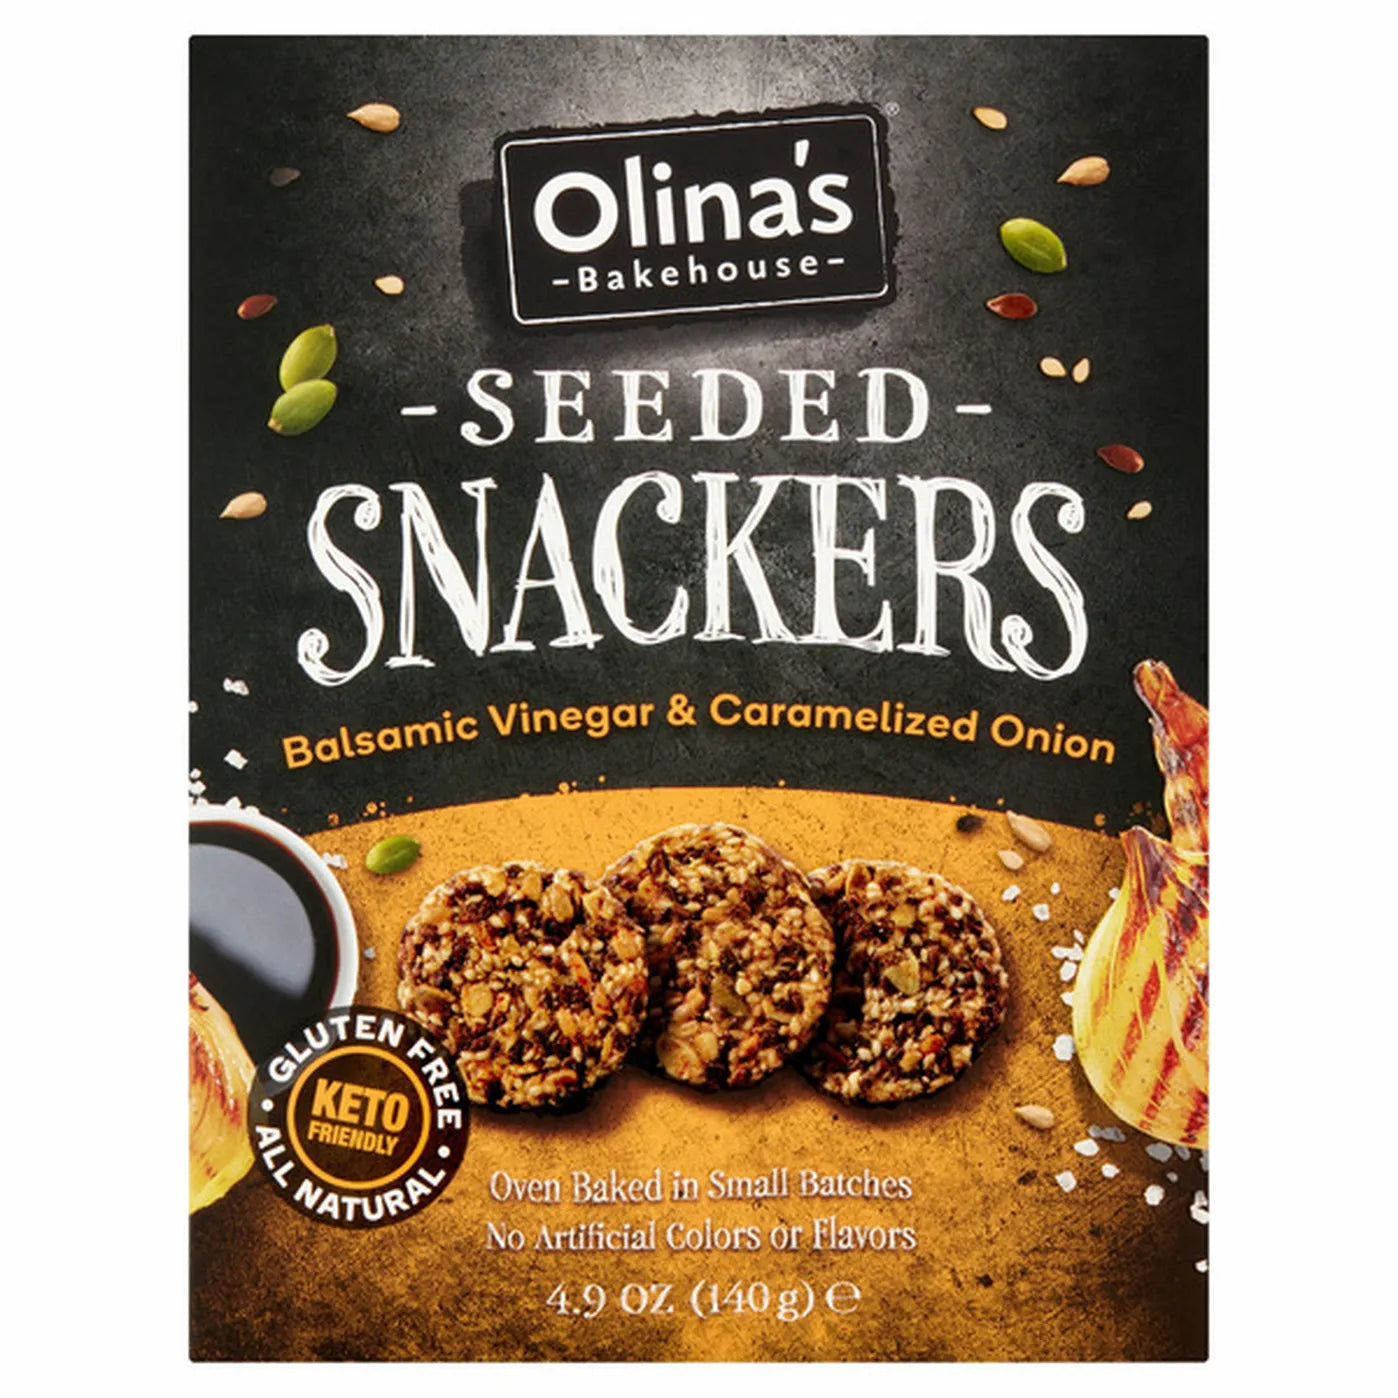 Olina's Bakehouse Balsamic Vinegar & Caramalized Onion Seeded Snackers, 4.9 Oz